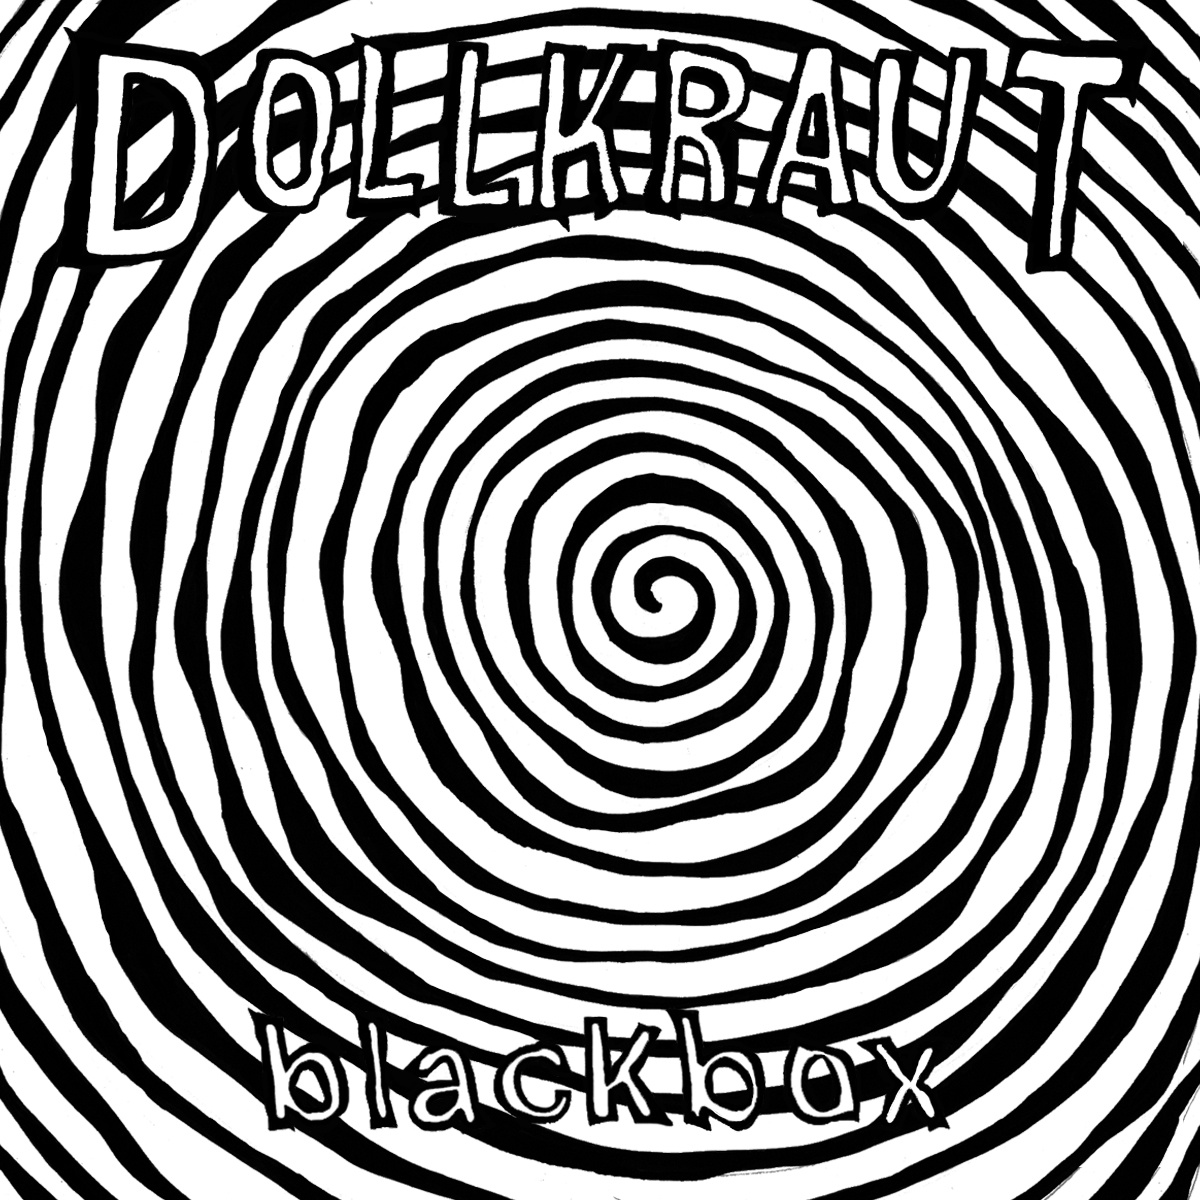 image cover: Dollkraut - Blackbox EP [CHAR 01]